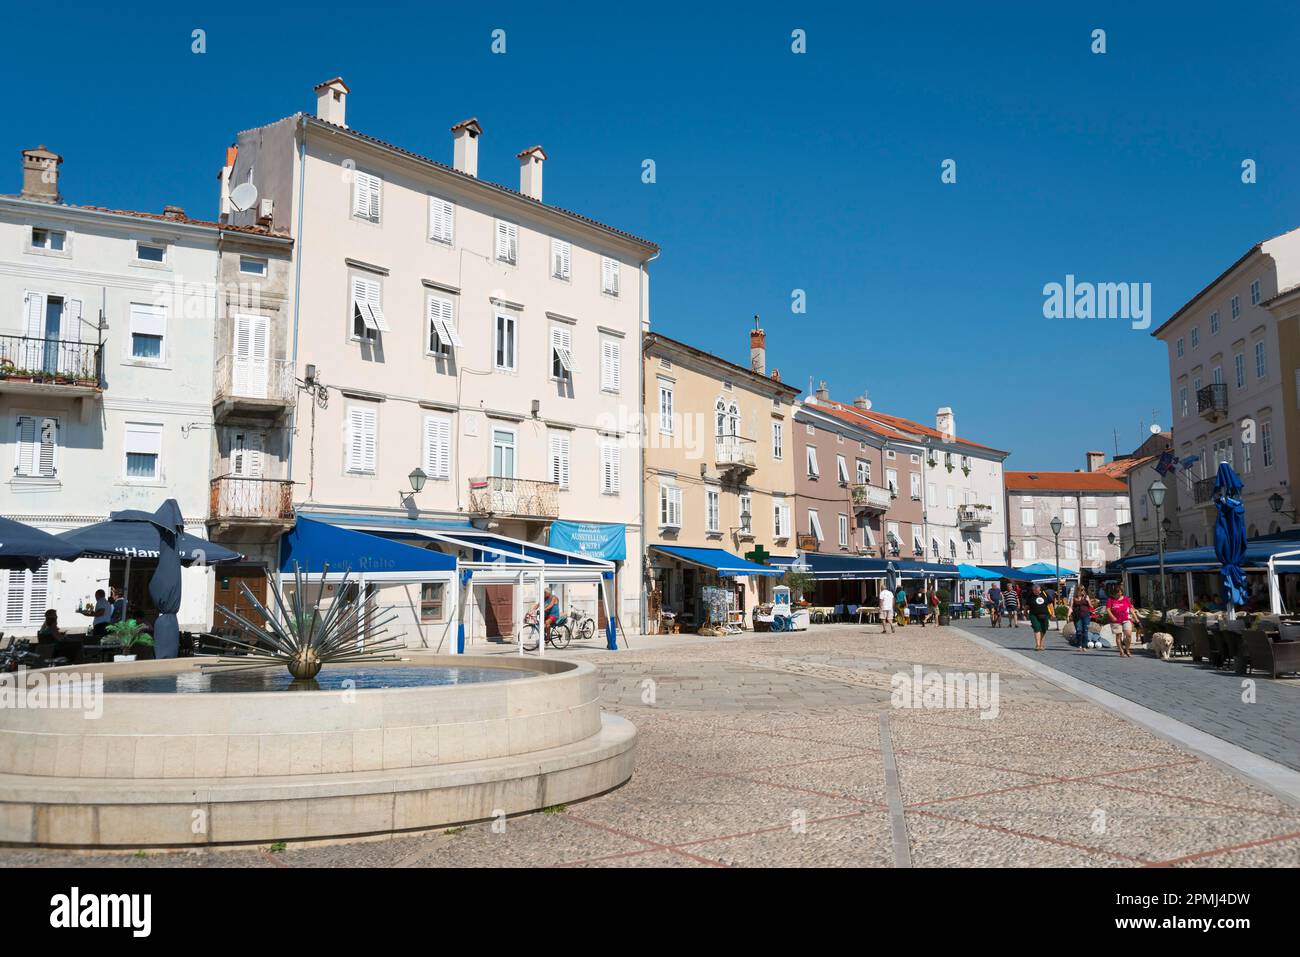 Fountain, Trg Petrica Square, Cres Town, Cres Island, Kvarner Gulf Bay, Croatia Stock Photo